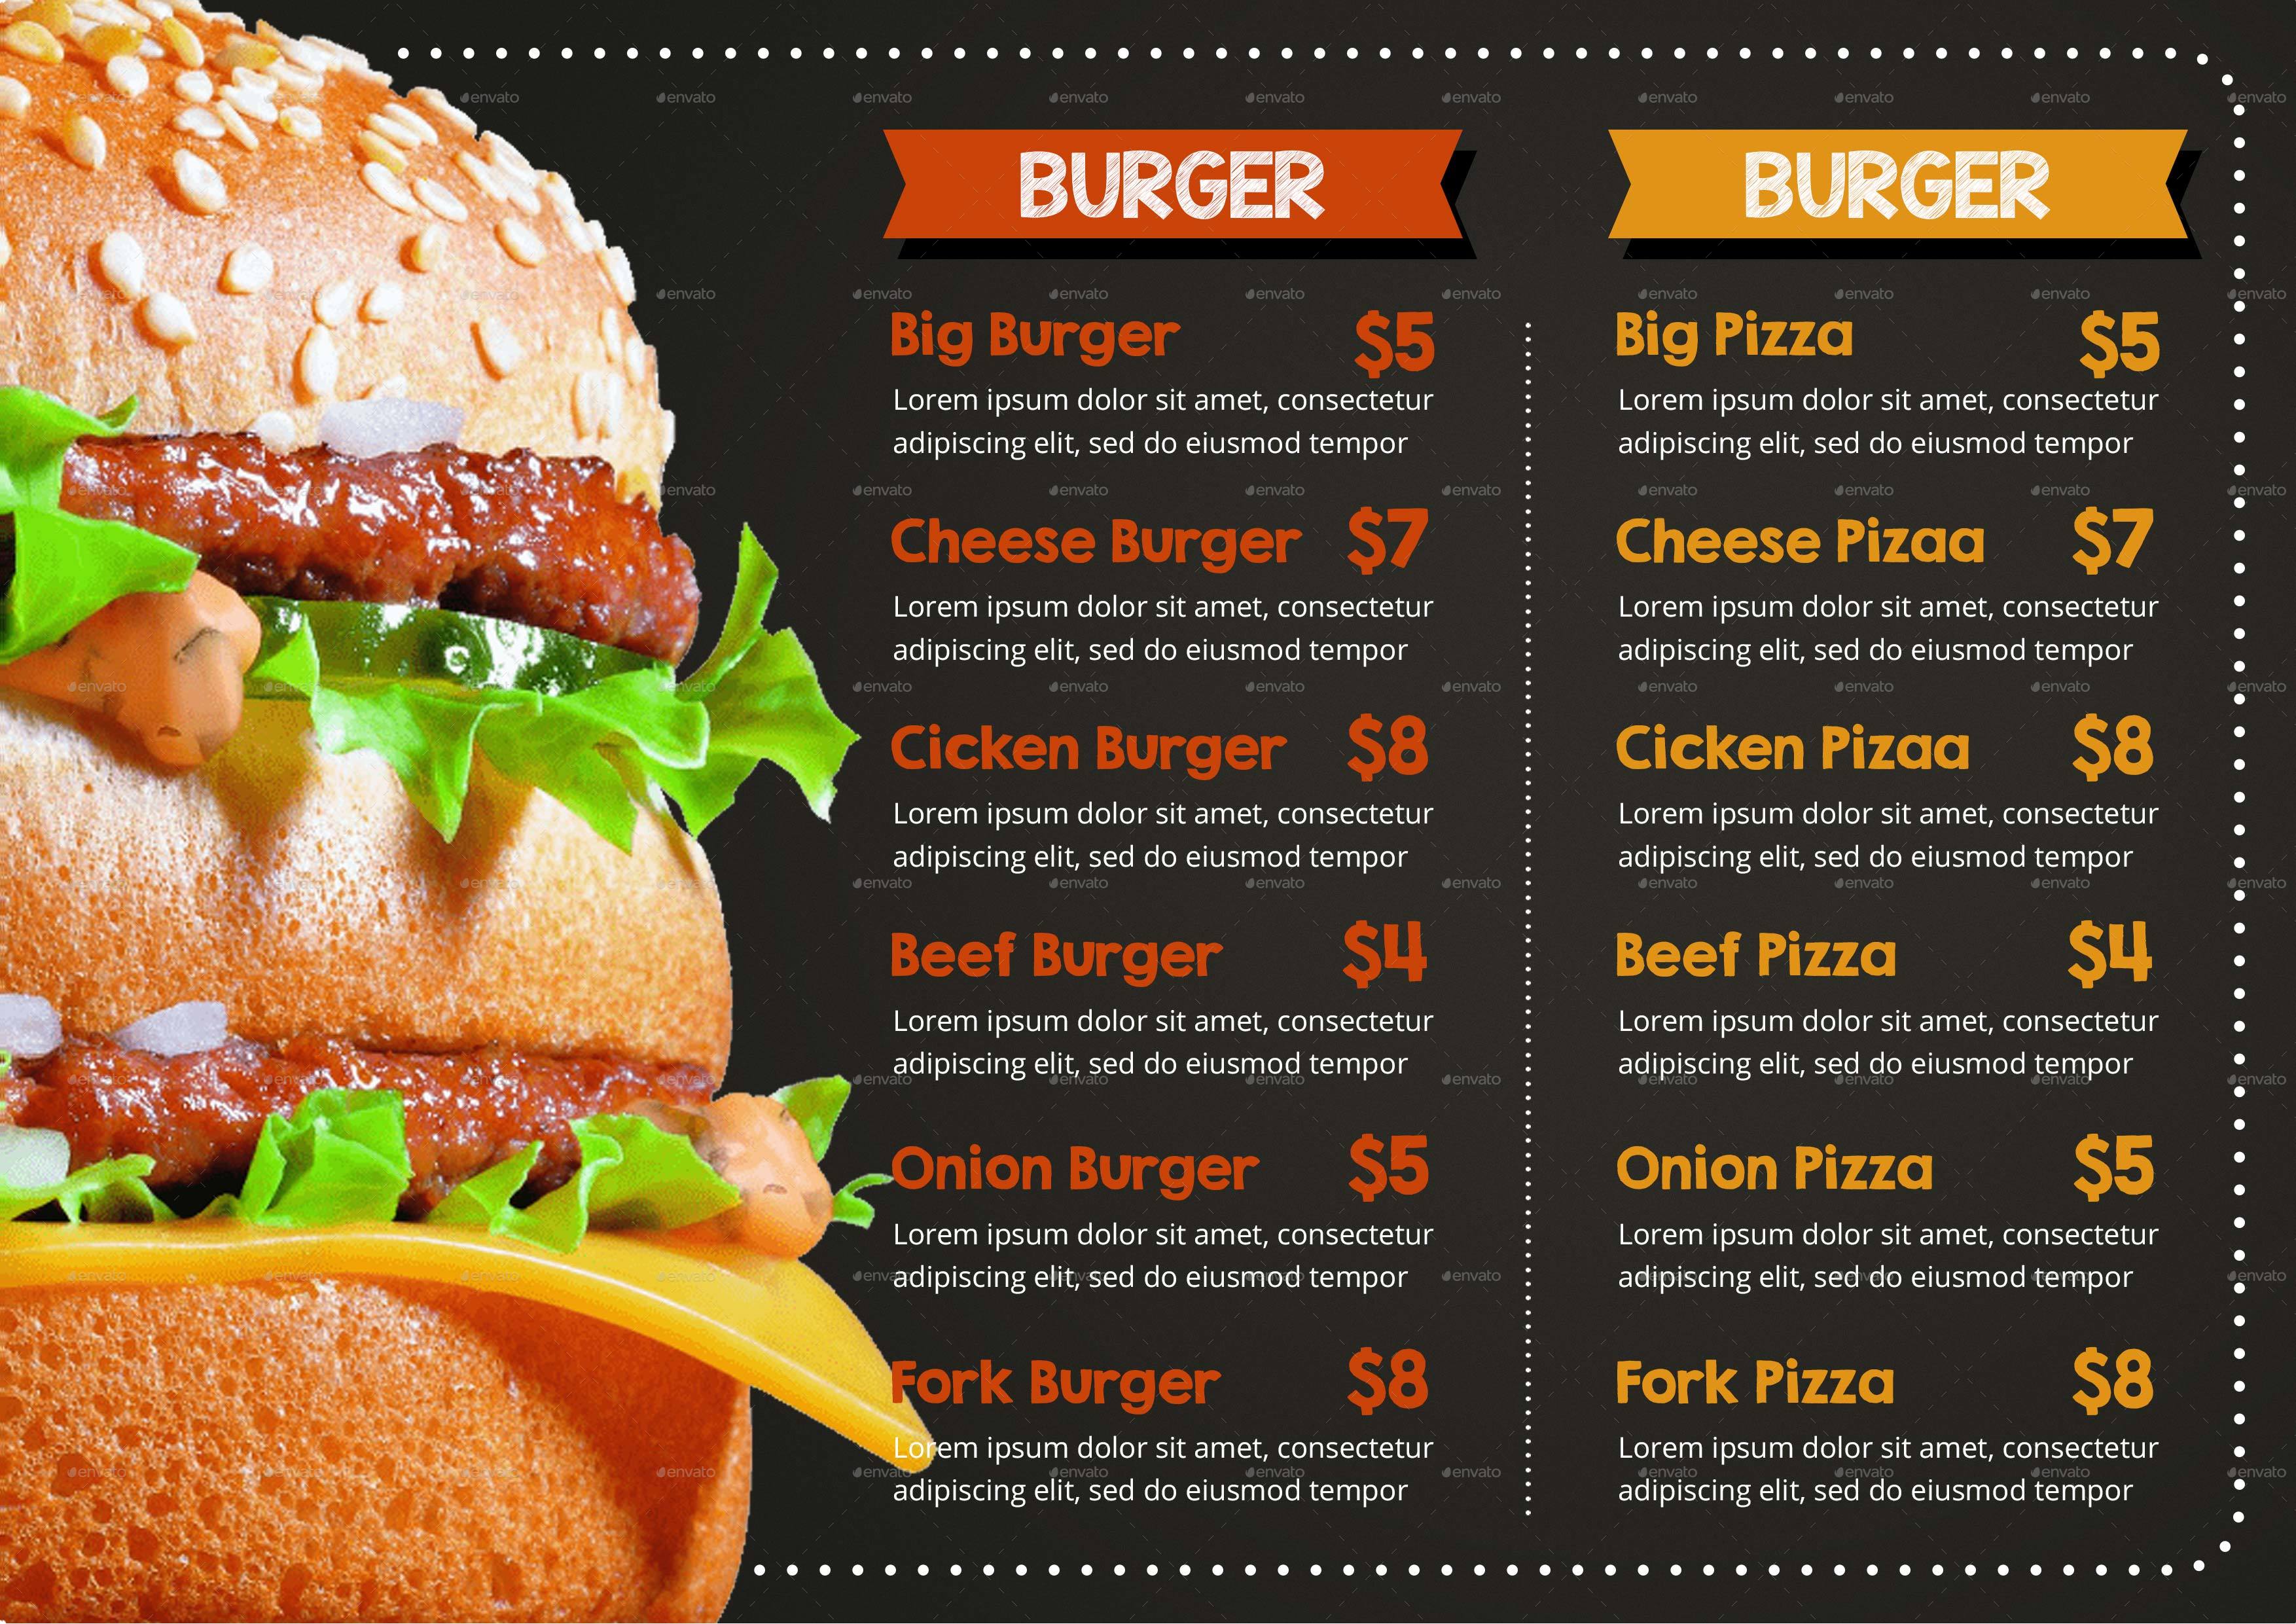 Burger Menu by Pixeln | GraphicRiver